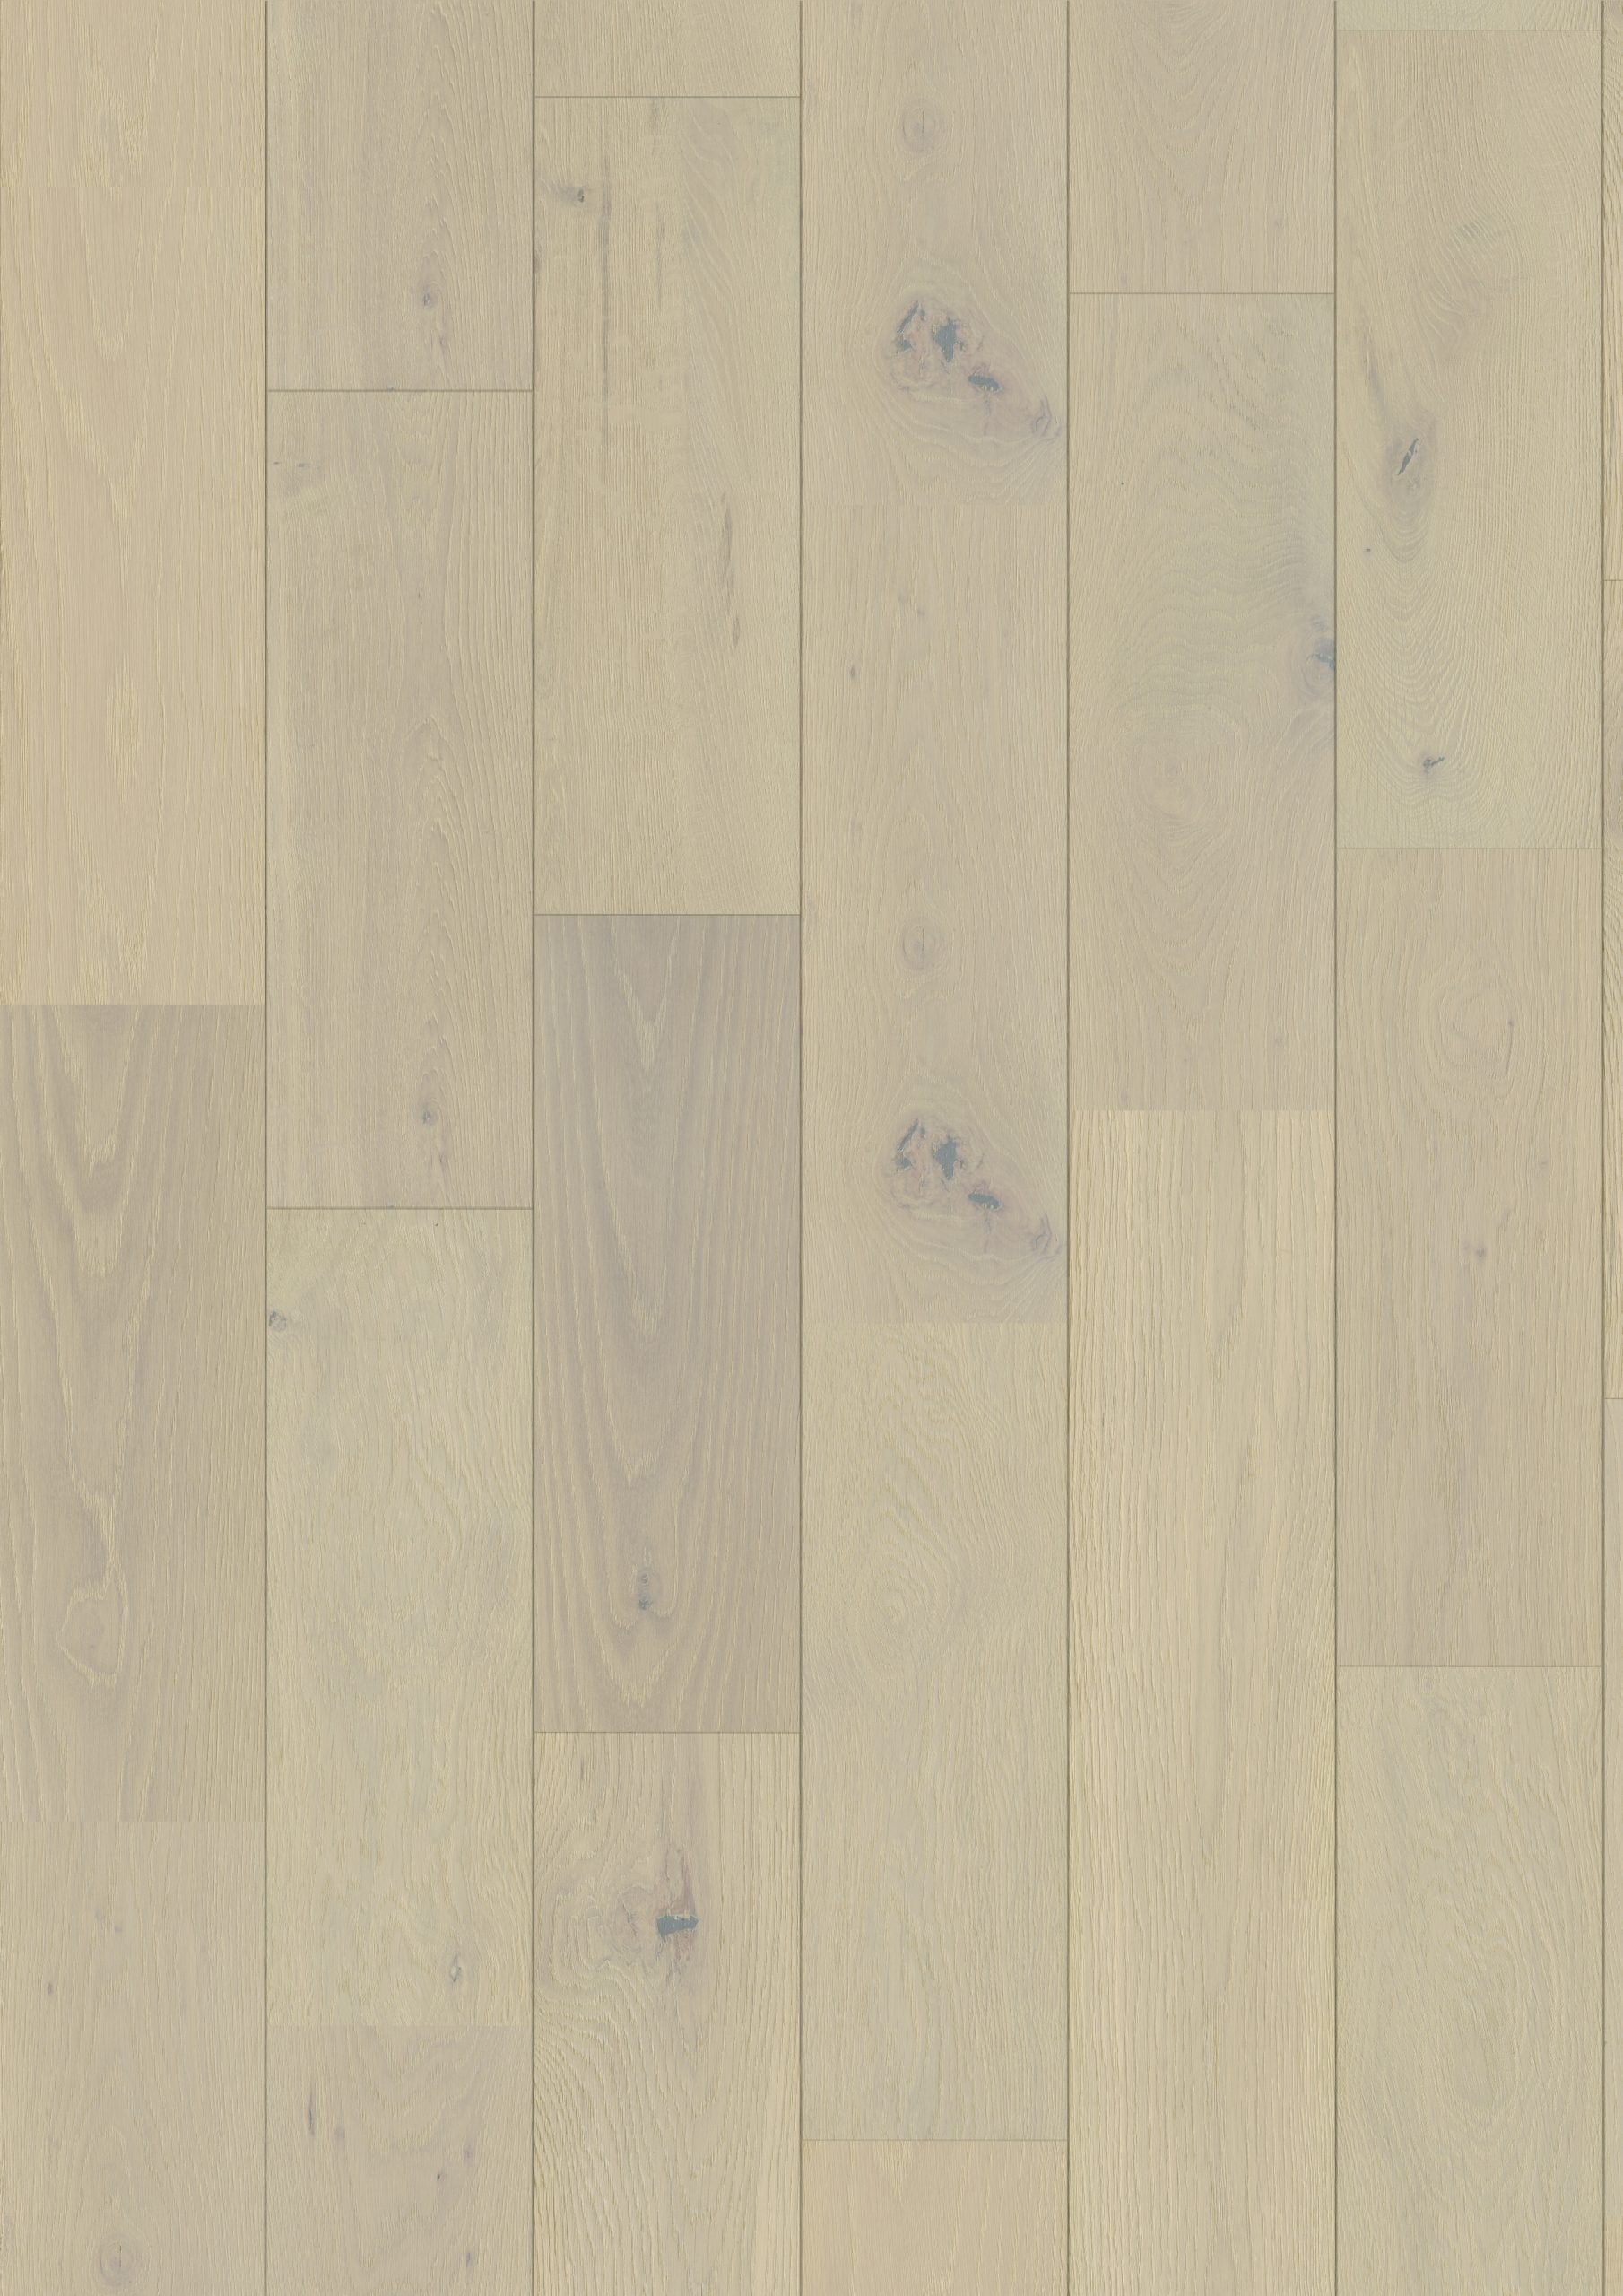 teka royal rivoli german french white oak natural hardwood flooring plank stain white distributed by surface group international